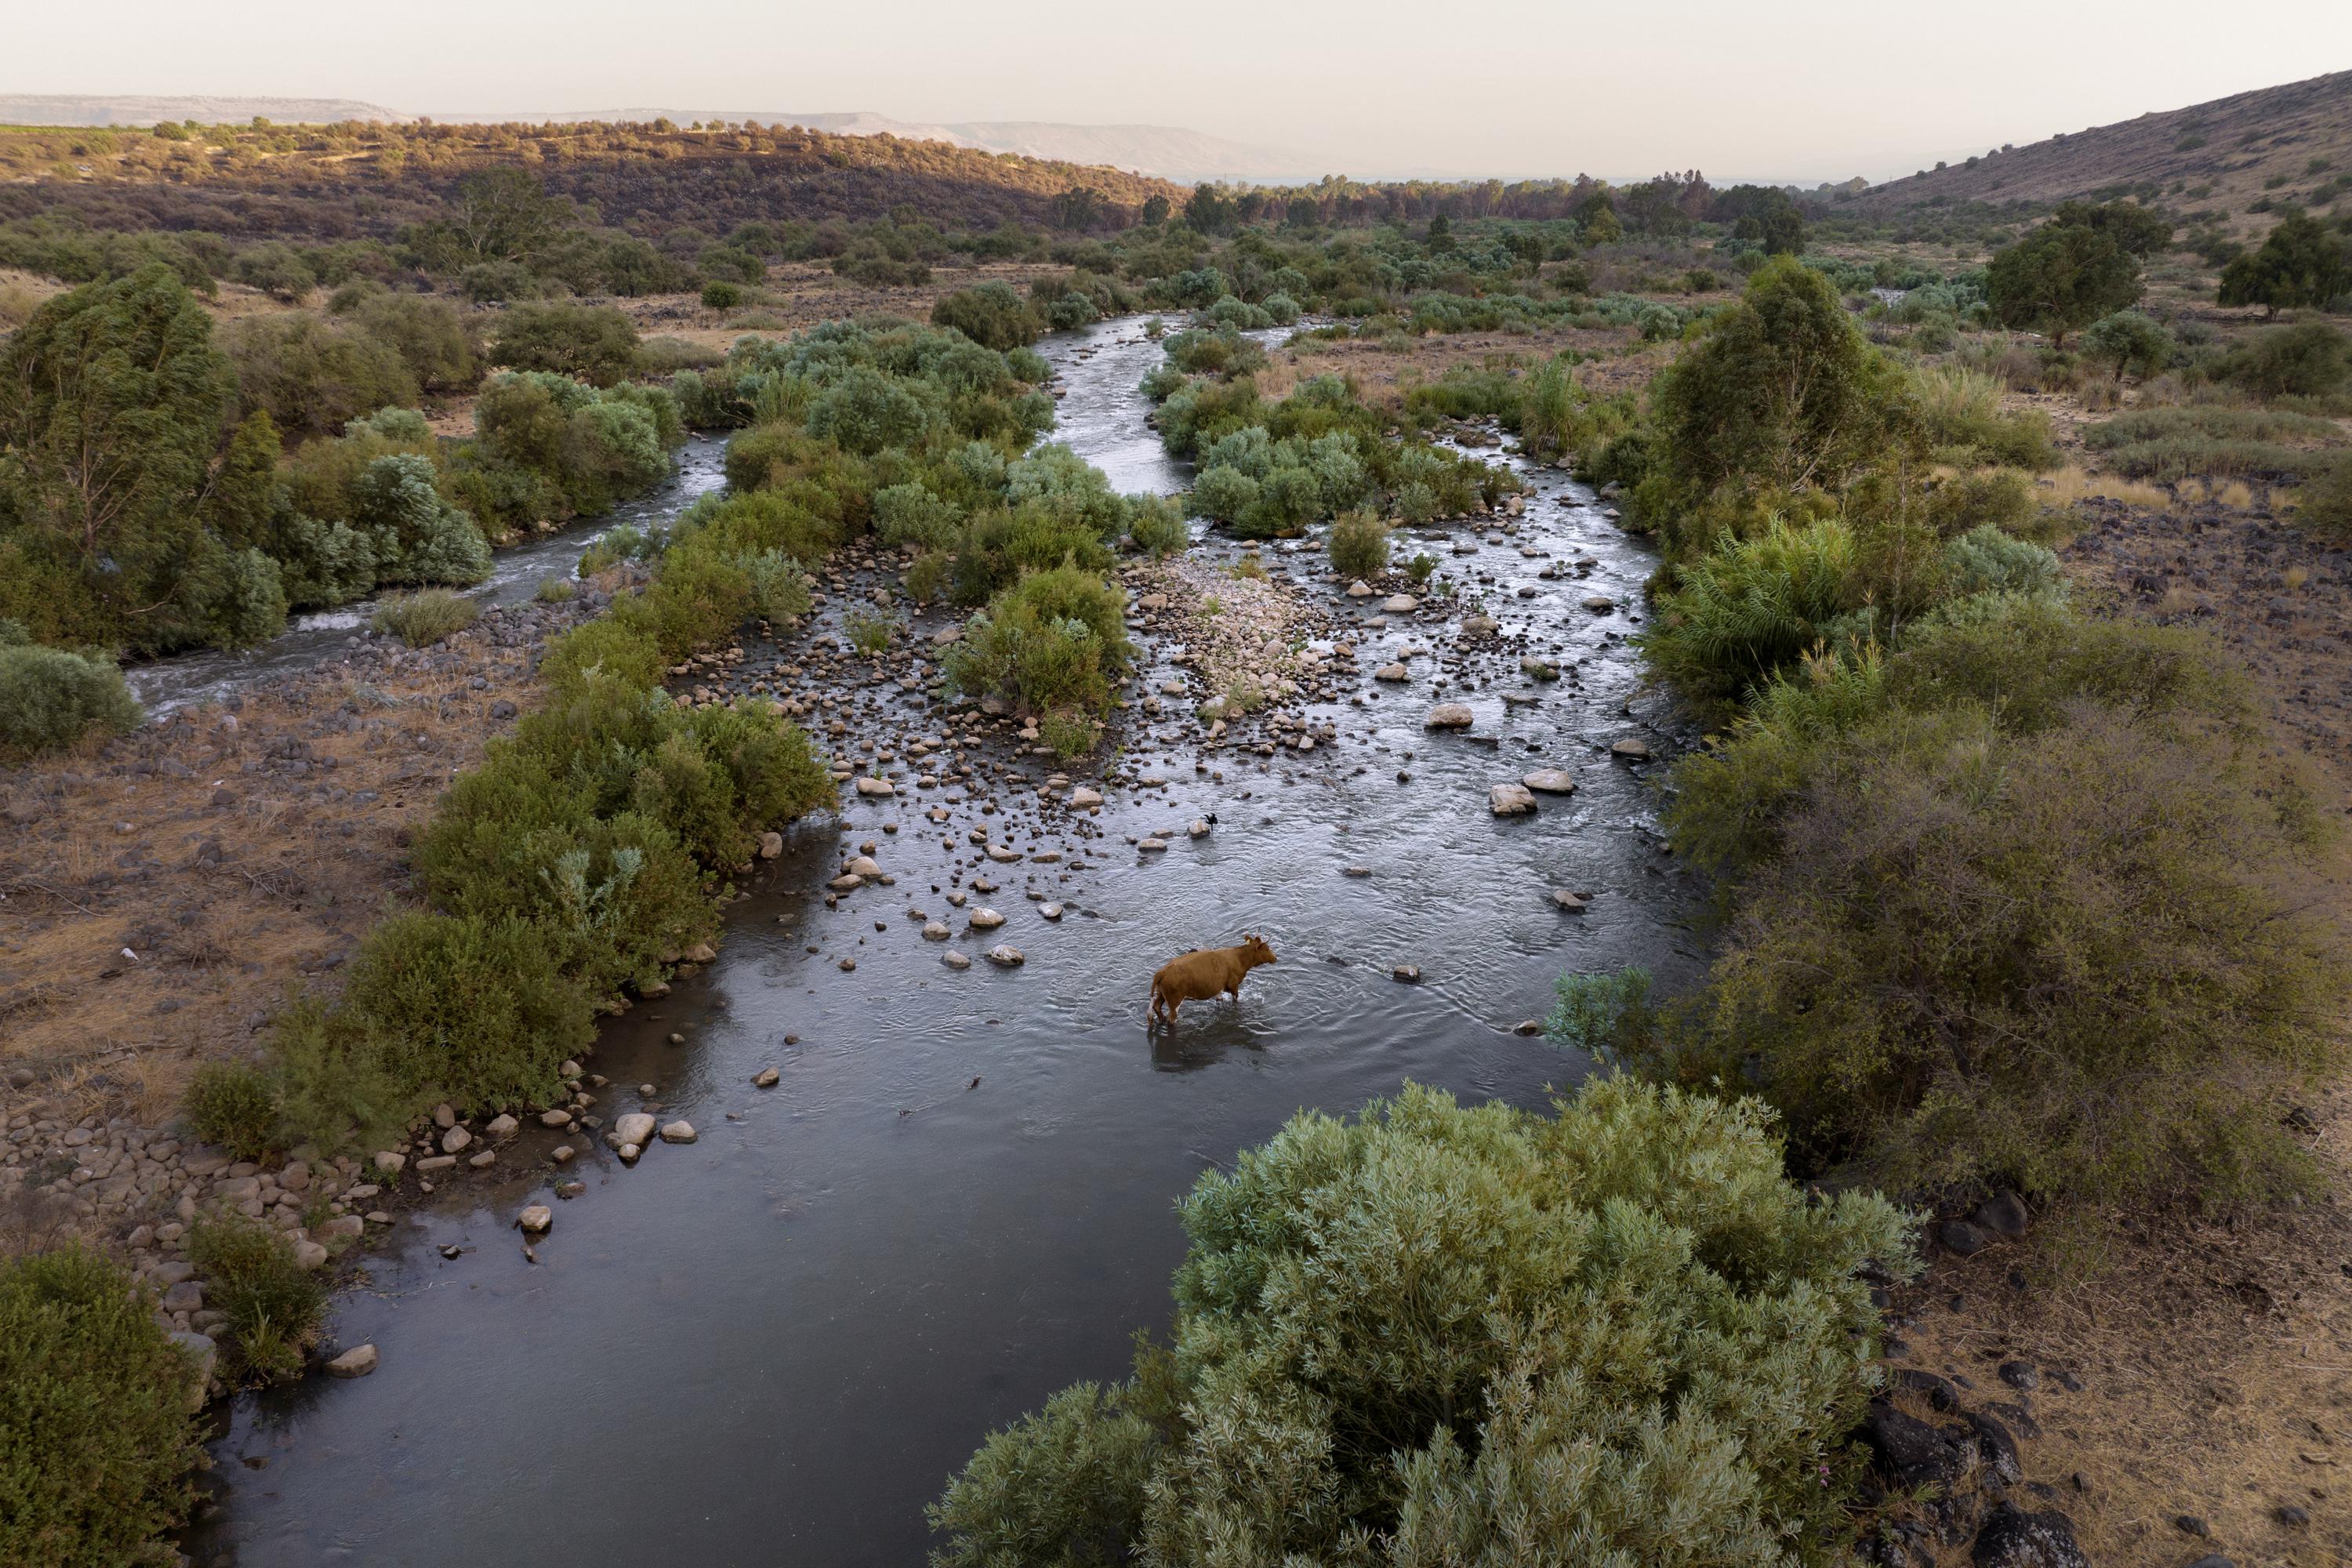 Jordan River, Jesus' baptism site, is 